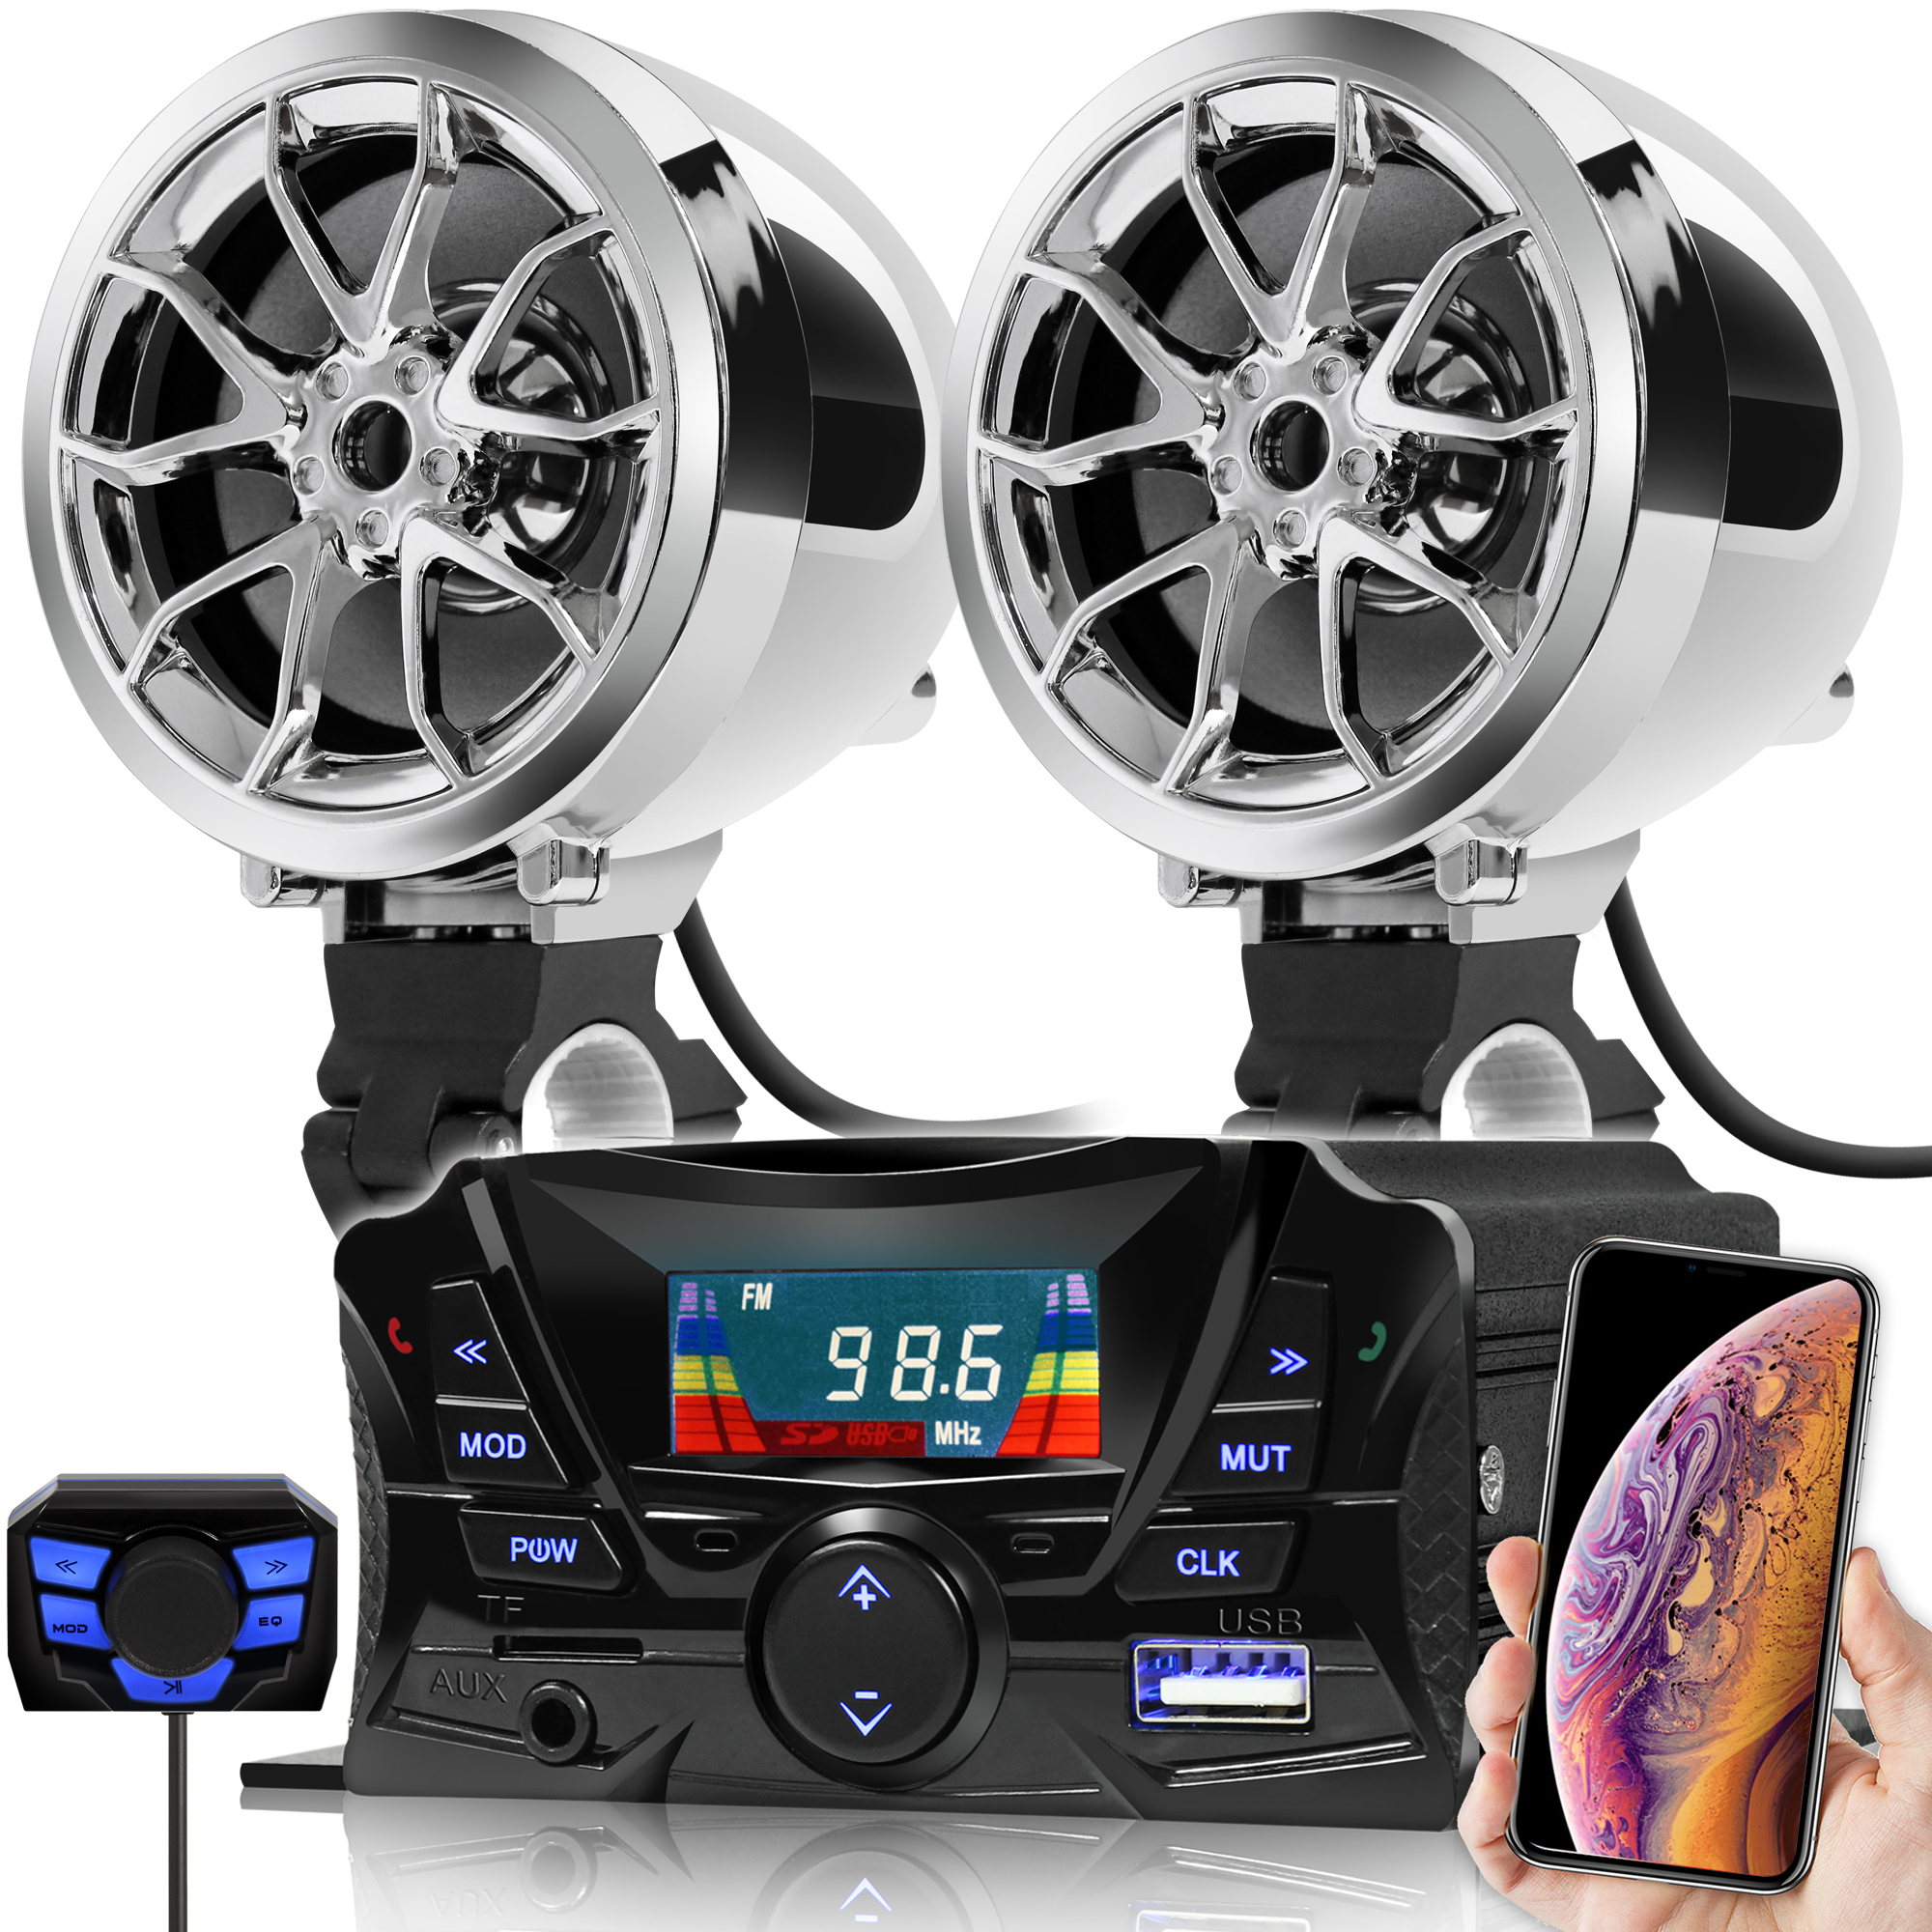 Bluetooth Amplifier Waterproof Motorcycle Stereo Speaker System MP3 FM Radio AUX